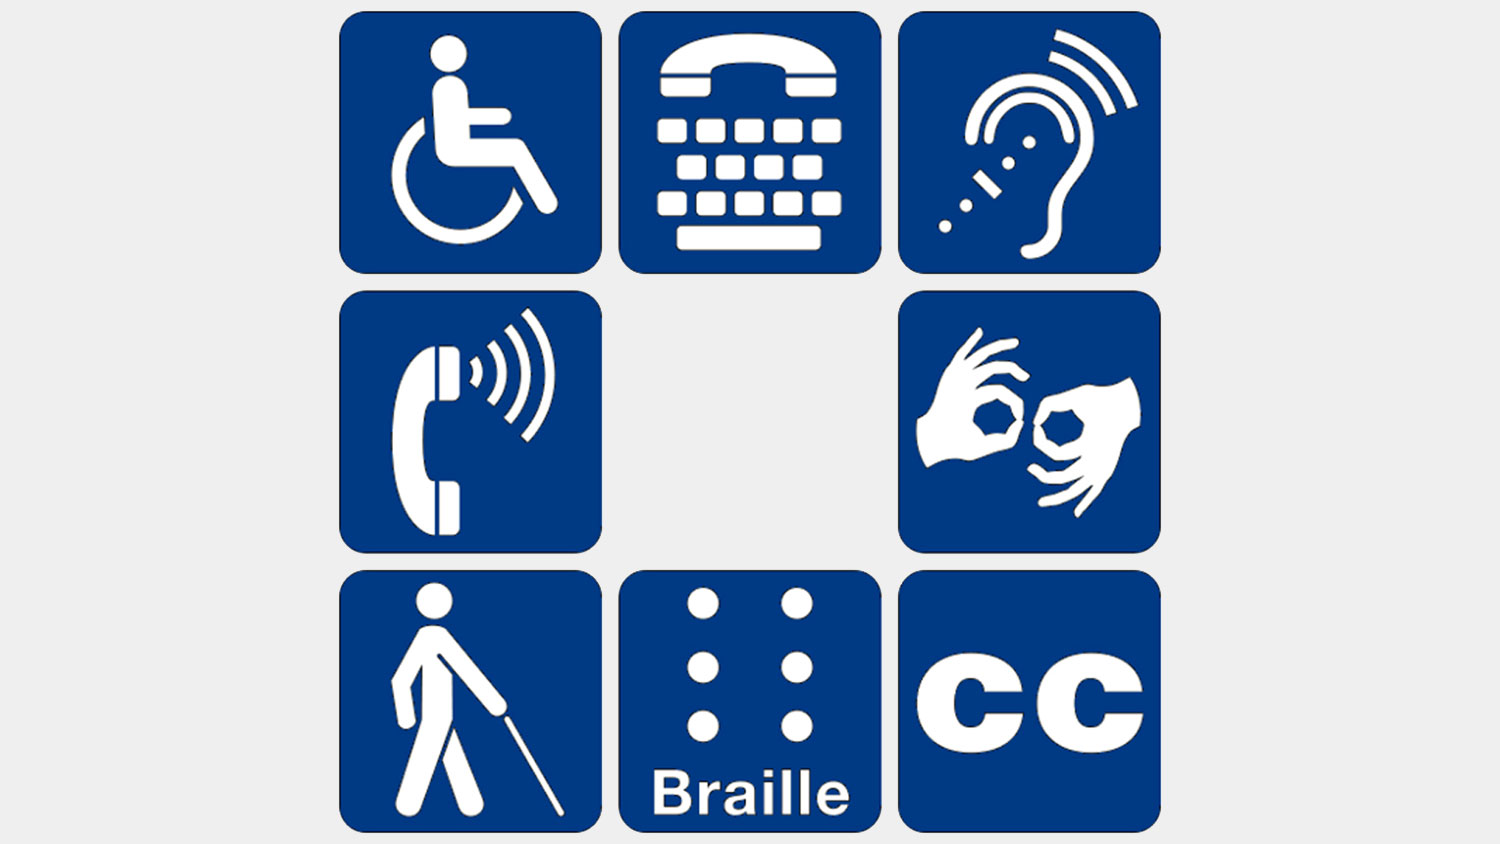 Disability symbols